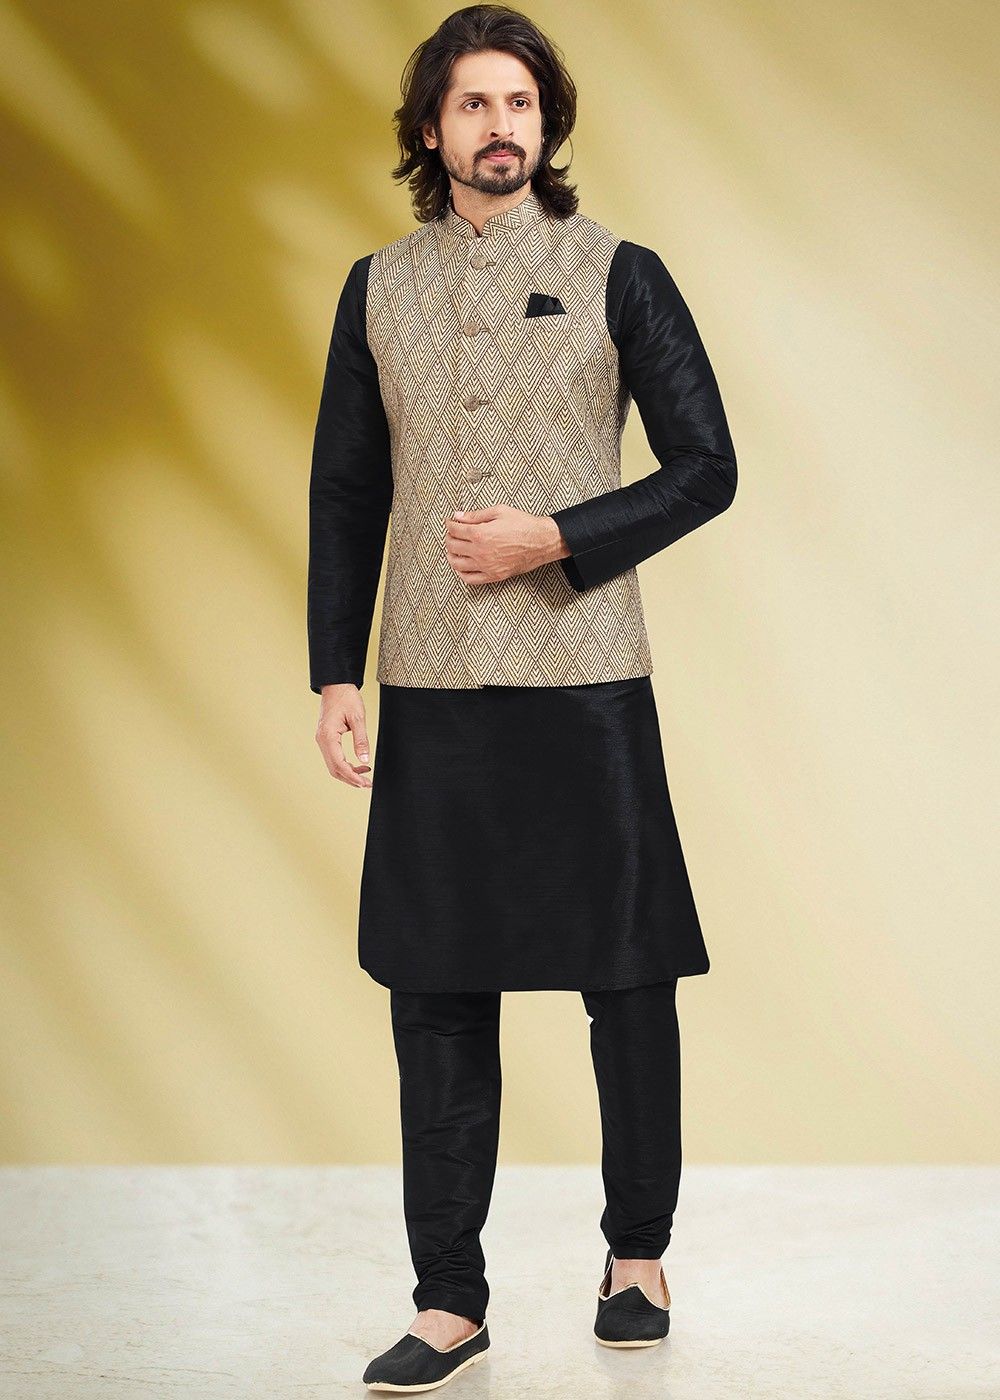 Top more than 188 black kurta pajama with jacket latest